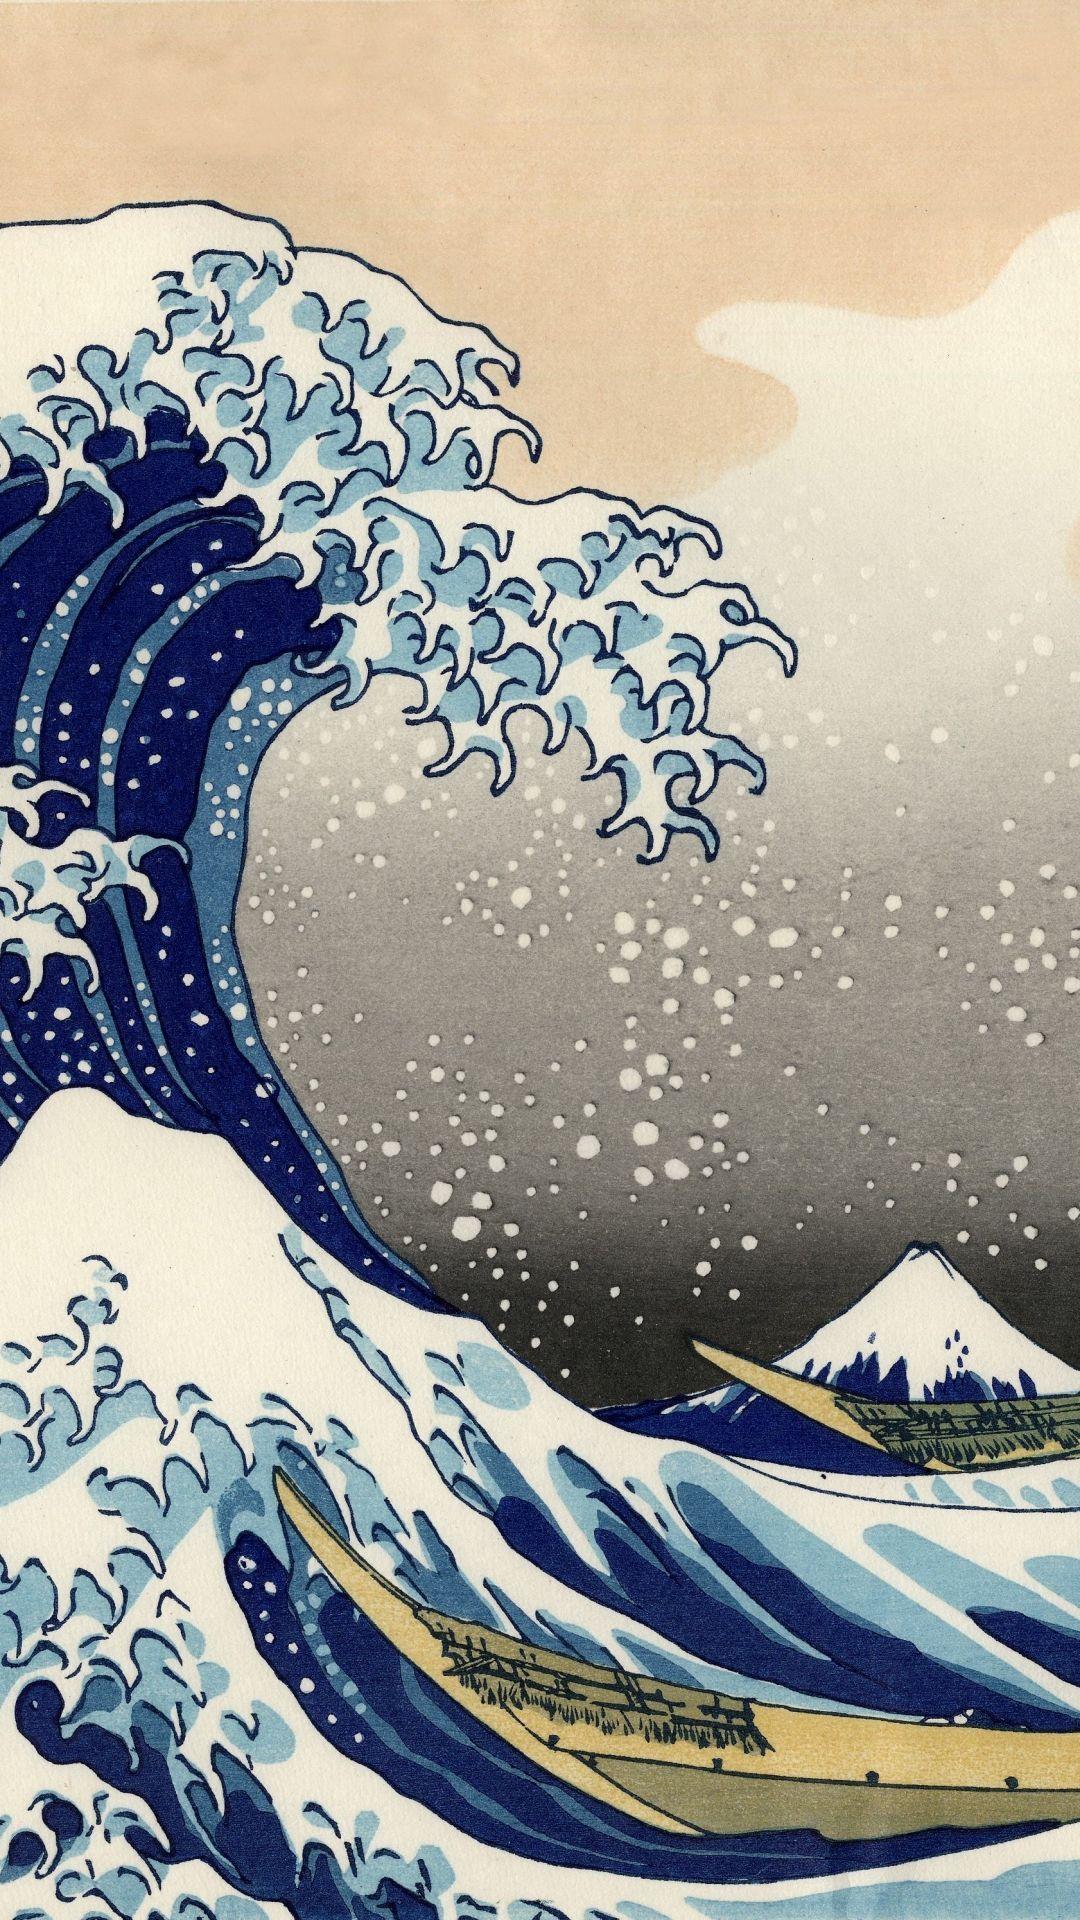 Artistic The Great Wave Off Kanagawa. Art Wallpaper, Waves Wallpaper, Japanese Art